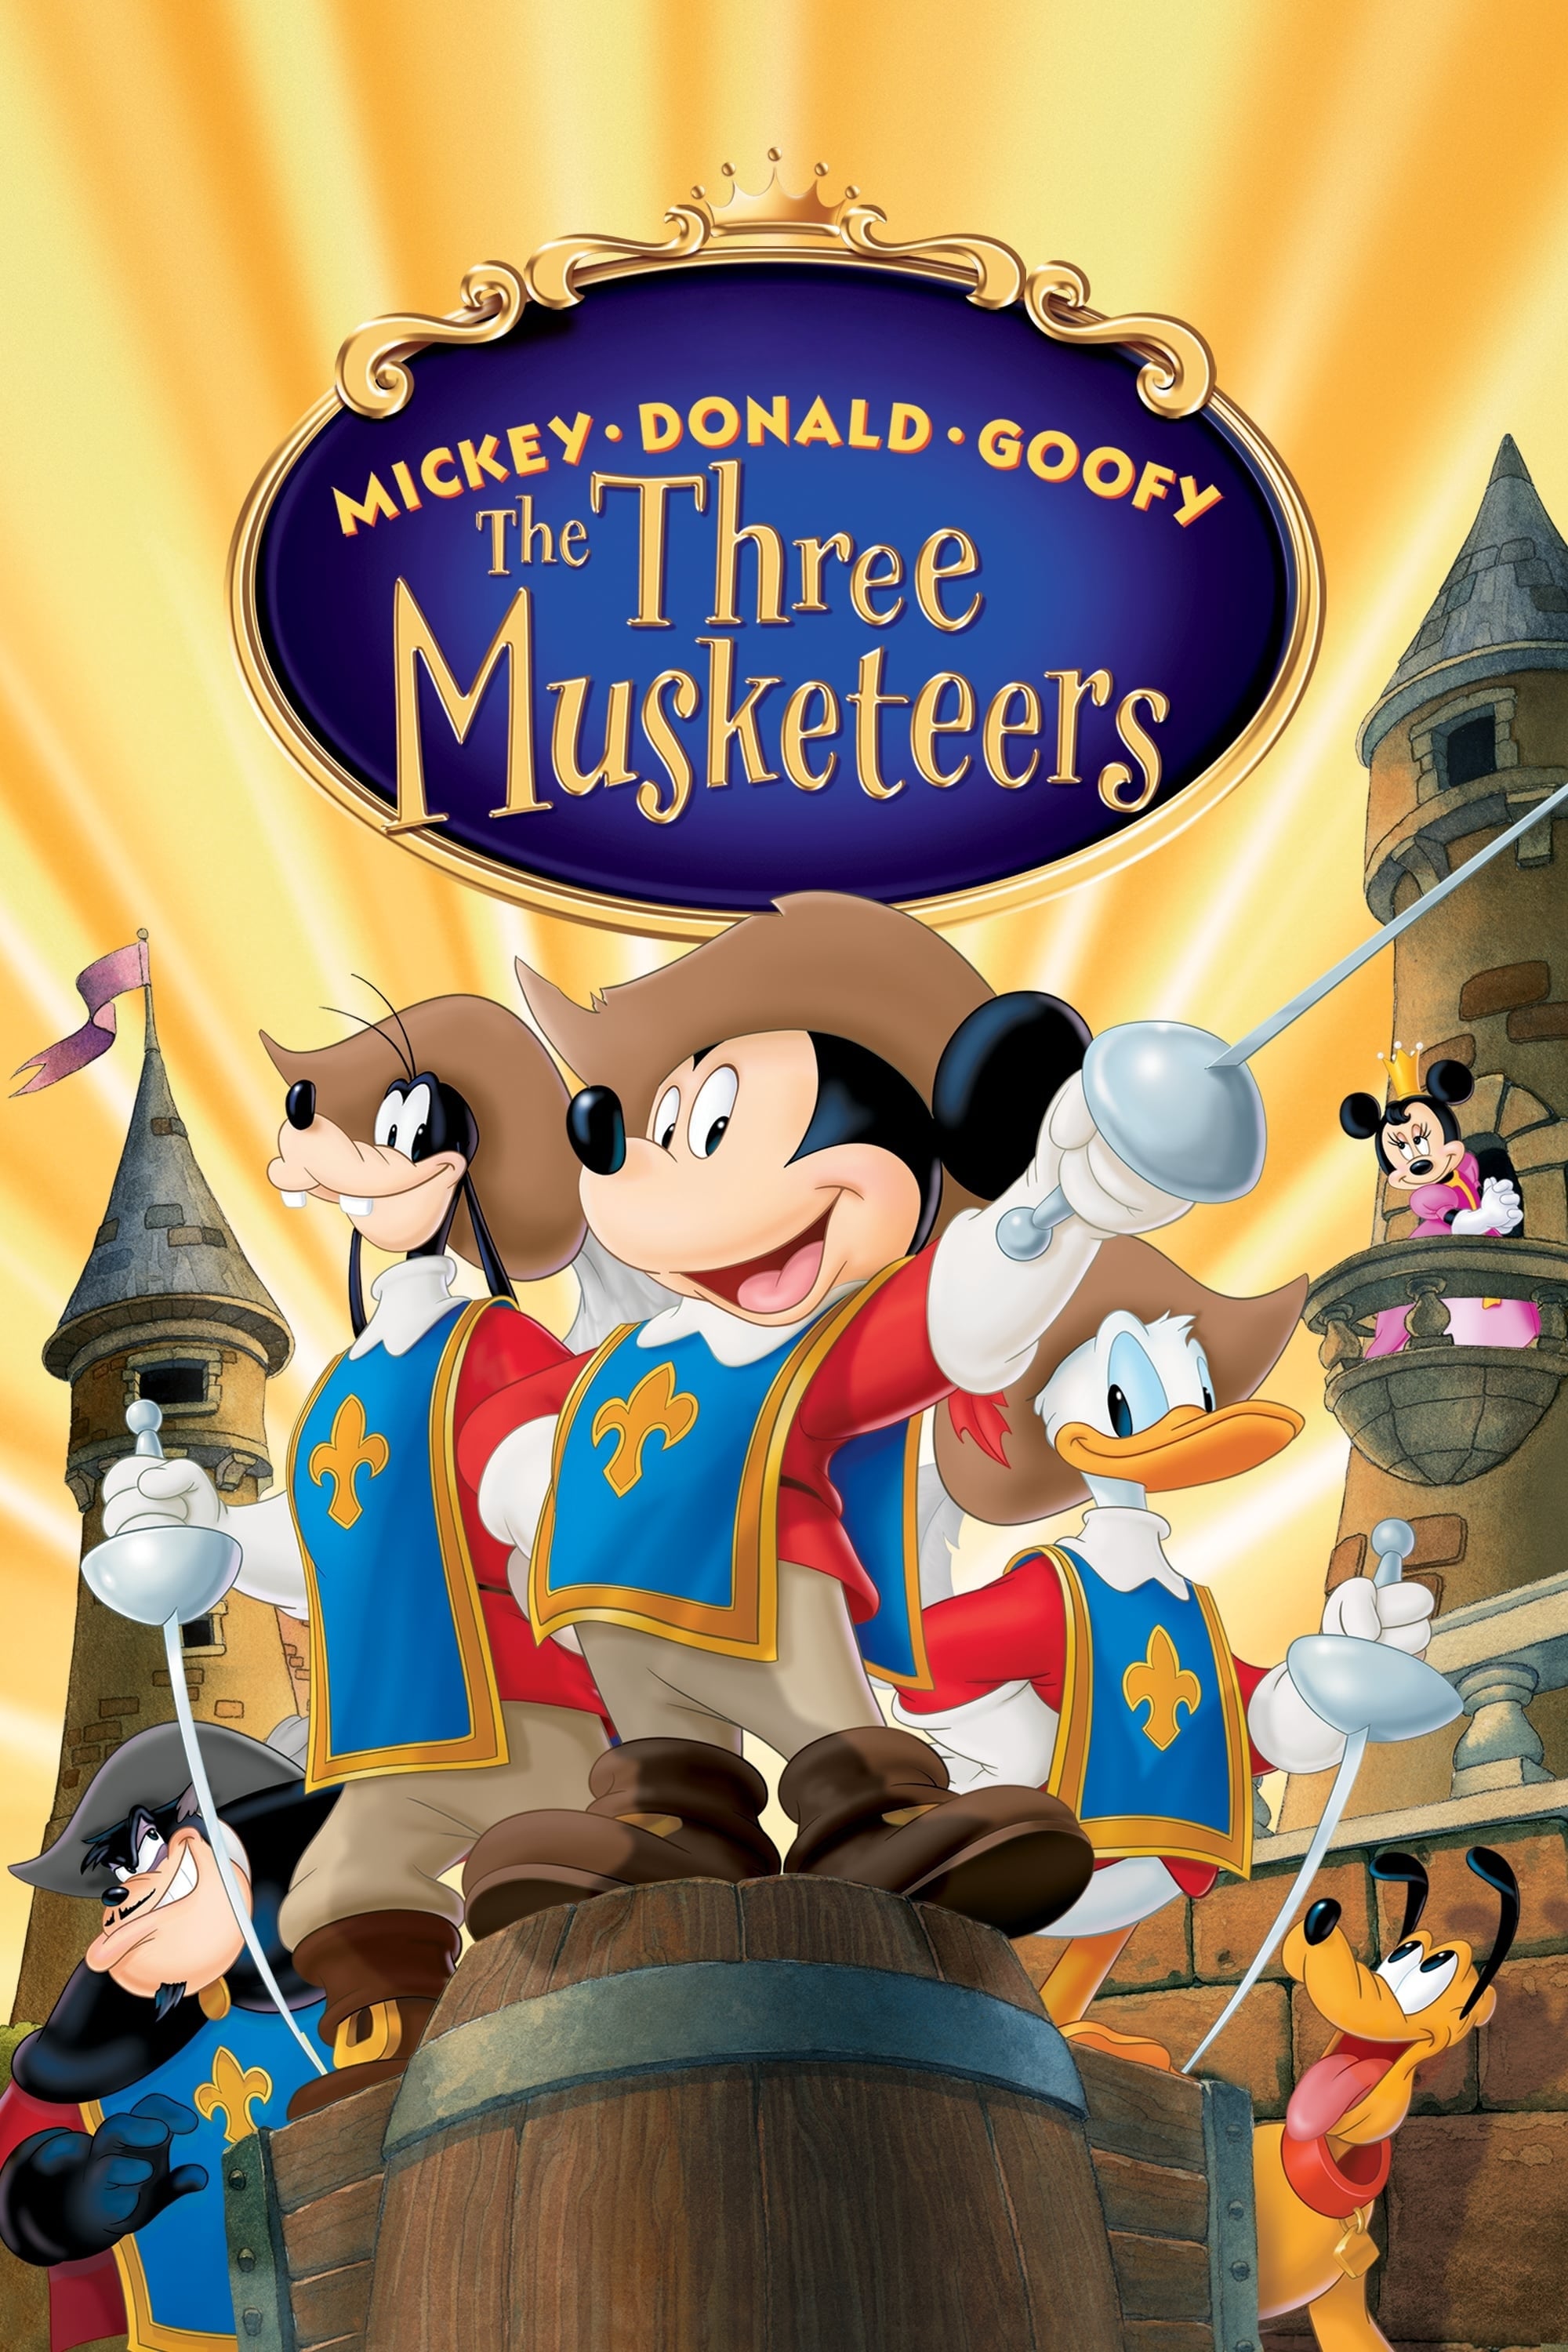 Mickey, Donald, Goofy: The Three Musketeers (Mickey, Donald, Goofy: The Three Musketeers) [2004]